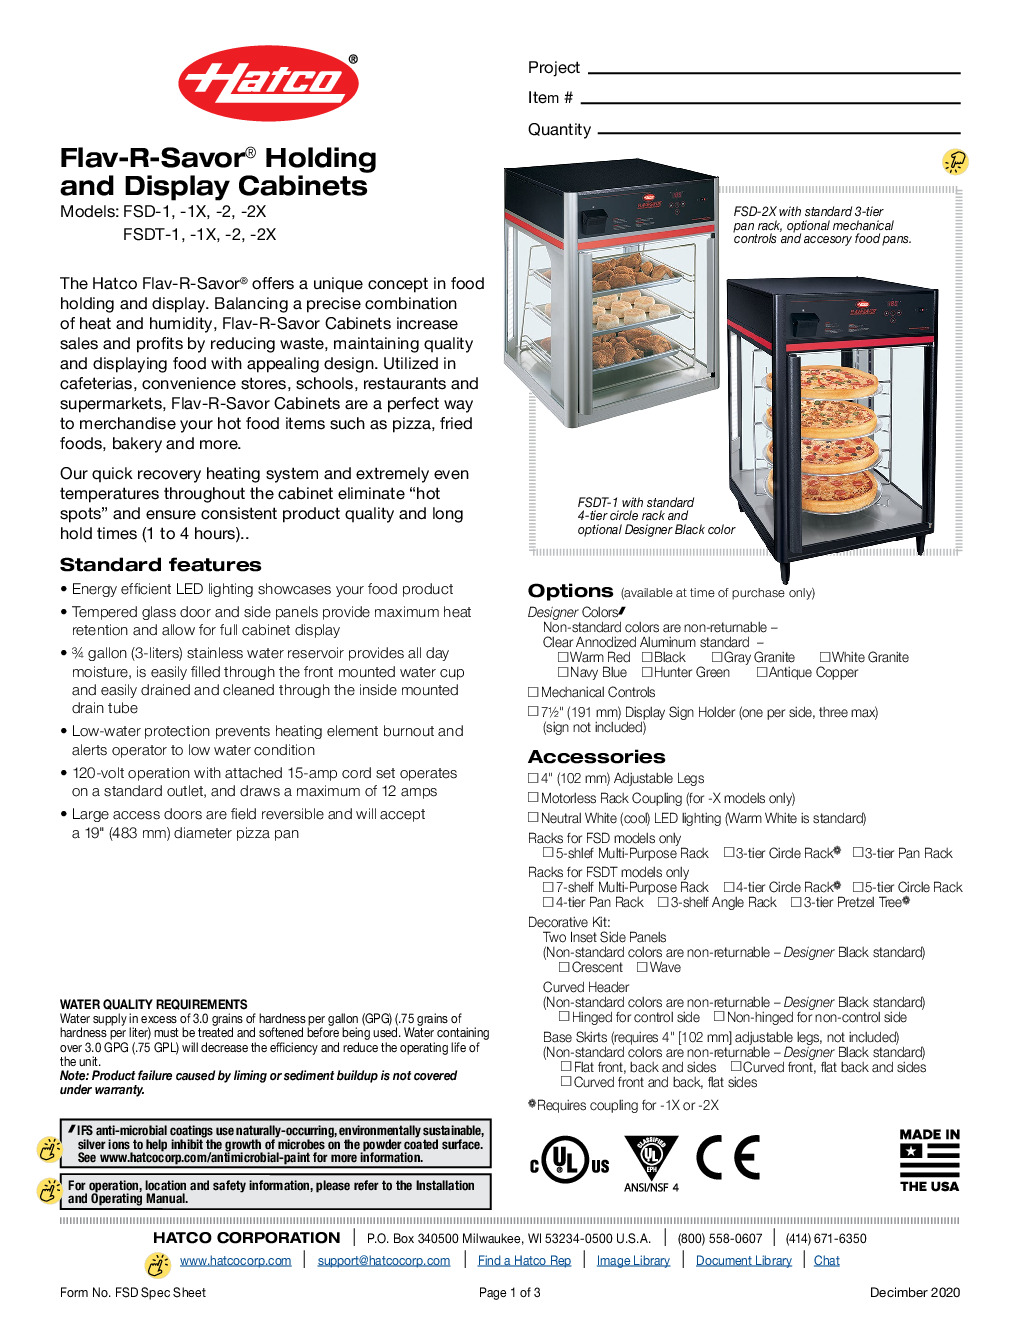 Hatco FSDT-2 Countertop Hot Food Display Case